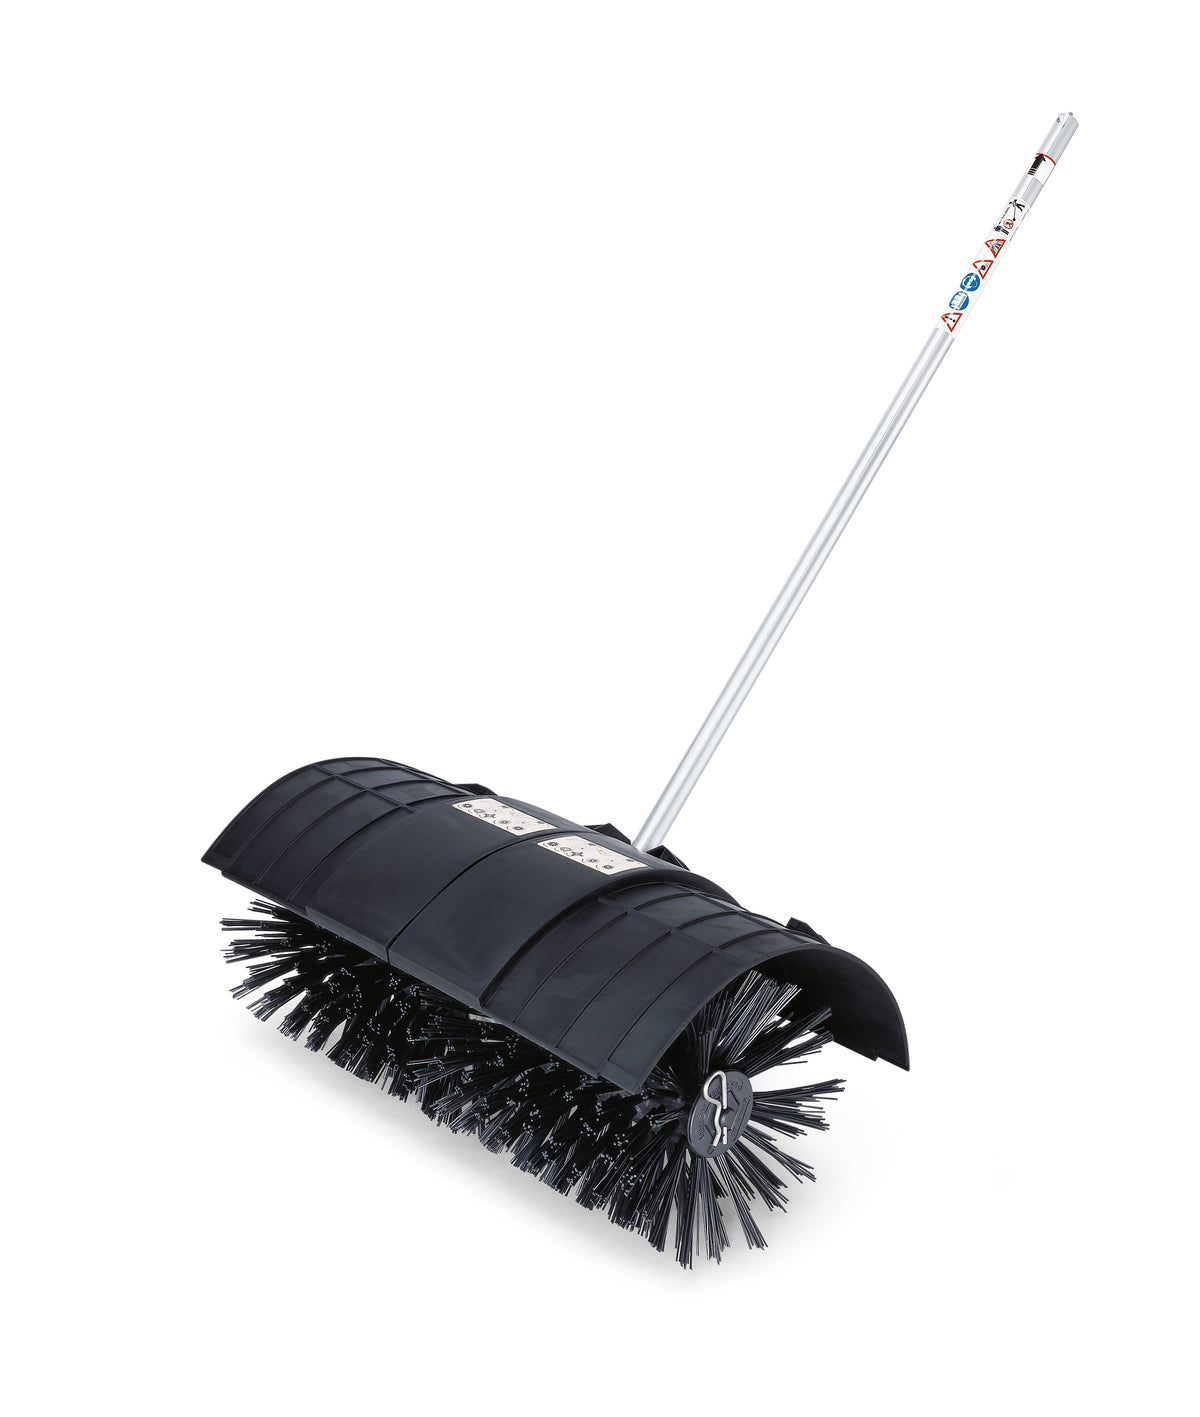 Stihl KB-KM Bristle Brush Sweeper Attachment for KombiTool System